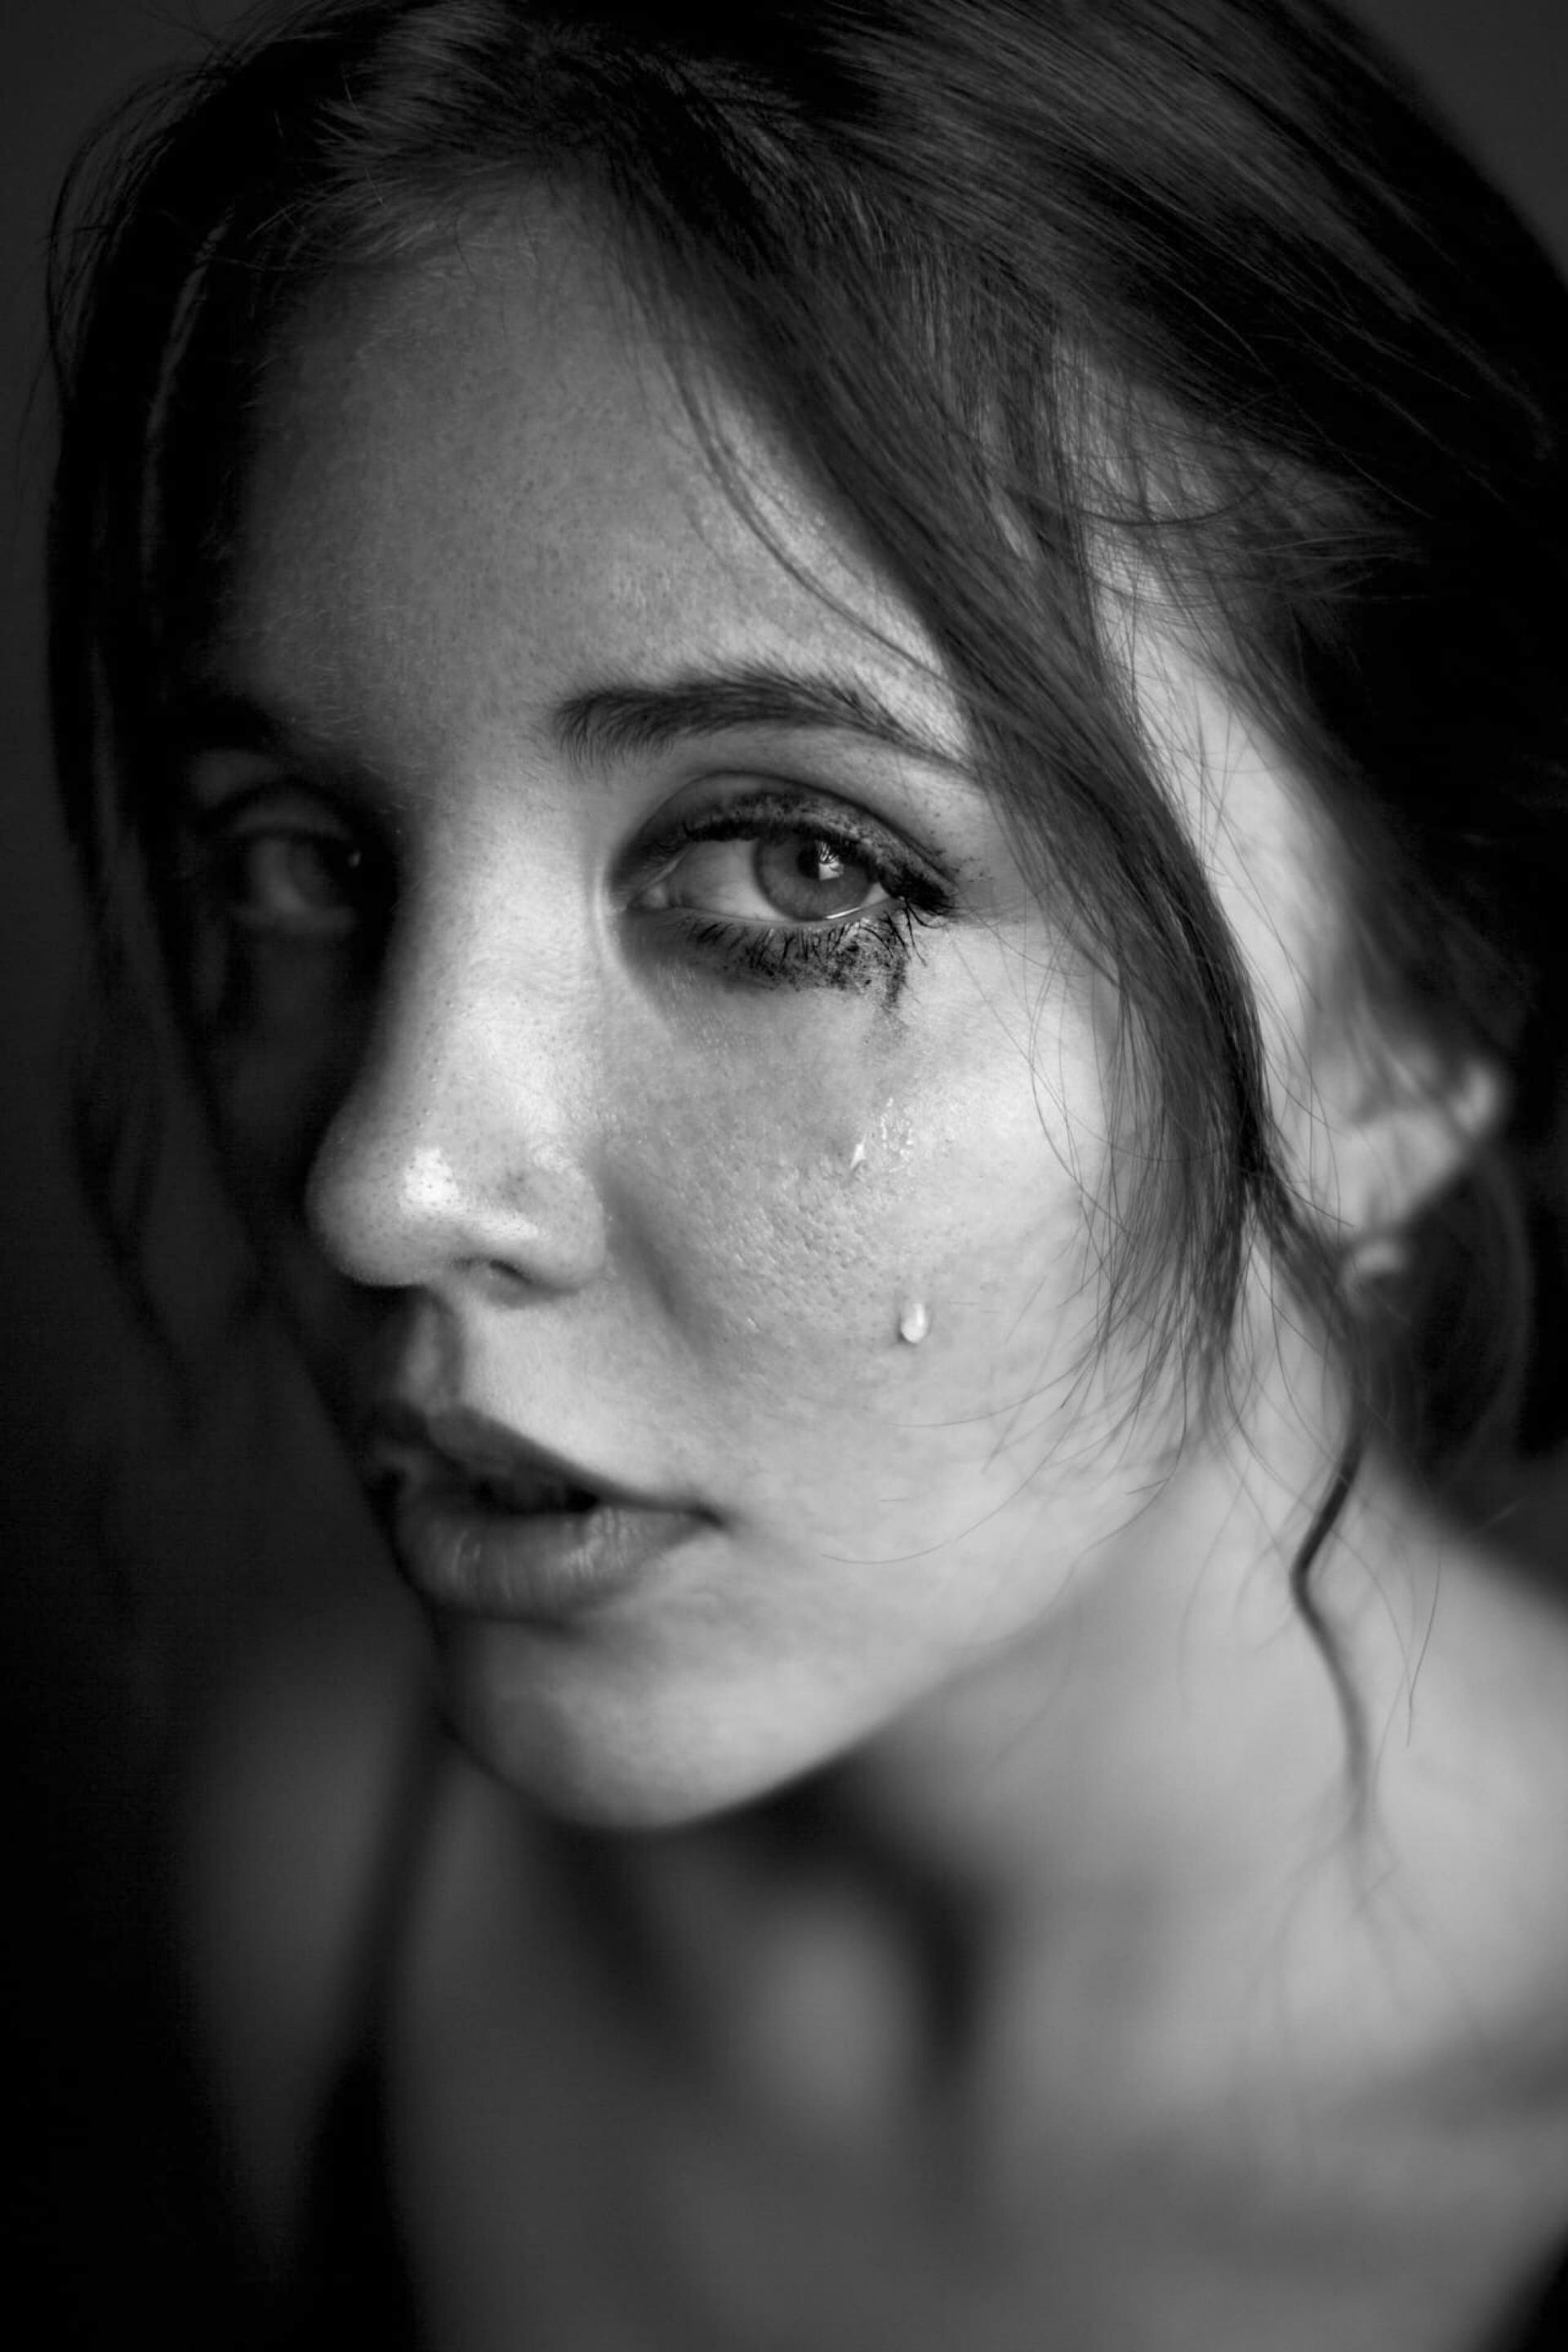 Femme qui pleure | Source : Pexels